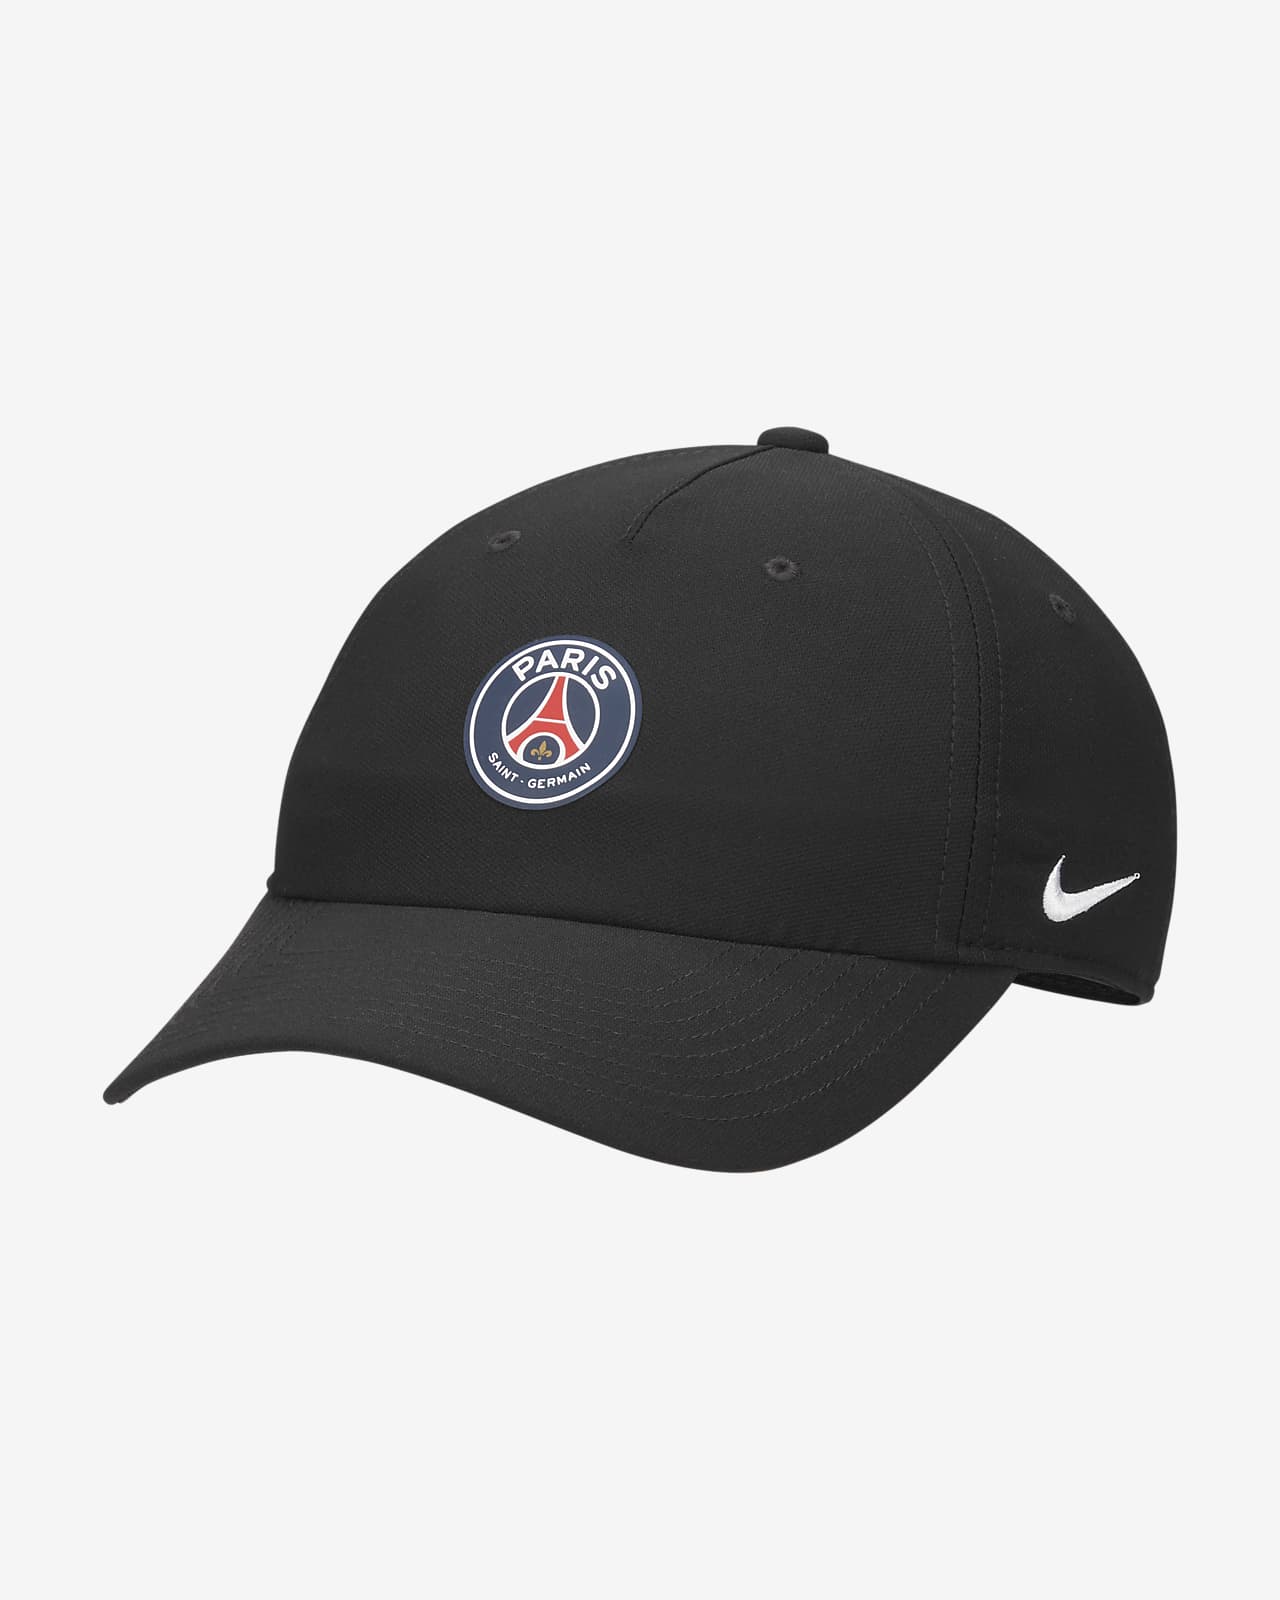 Paris Saint-Germain Club Nike Football Unstructured Cap